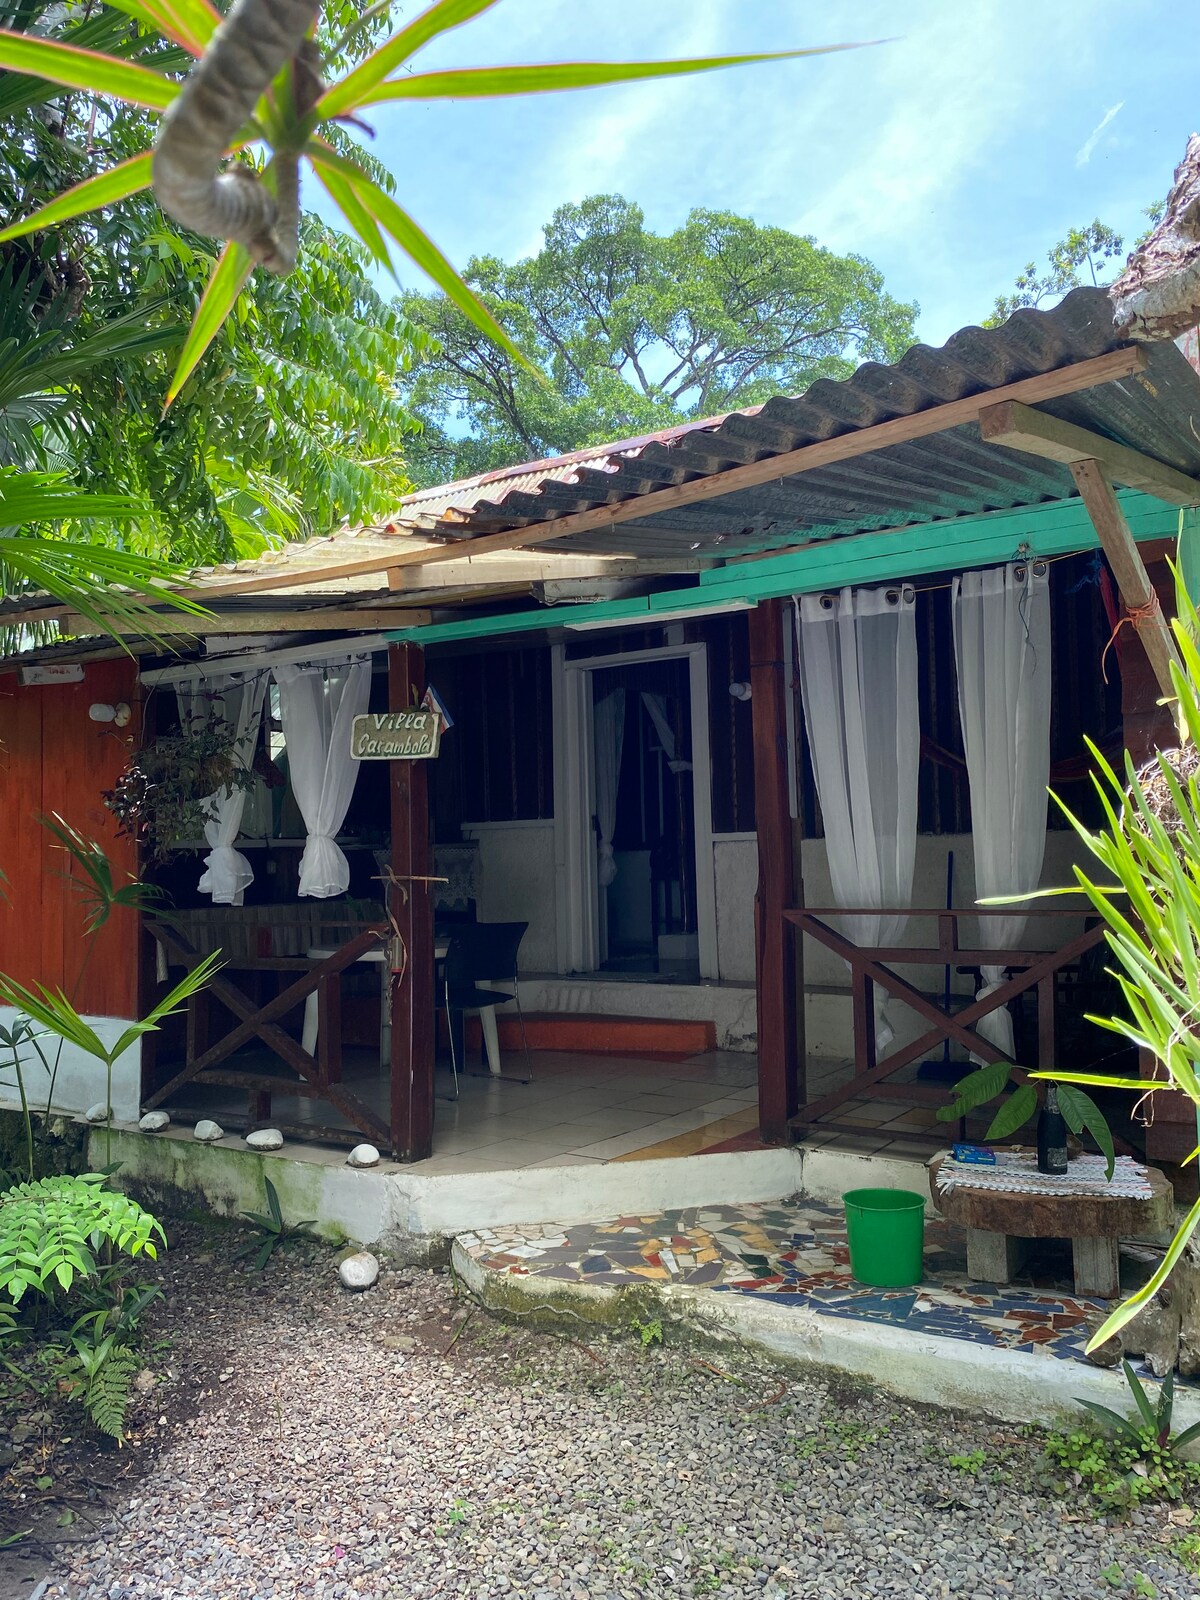 Cosy cabina in tropical garden setting